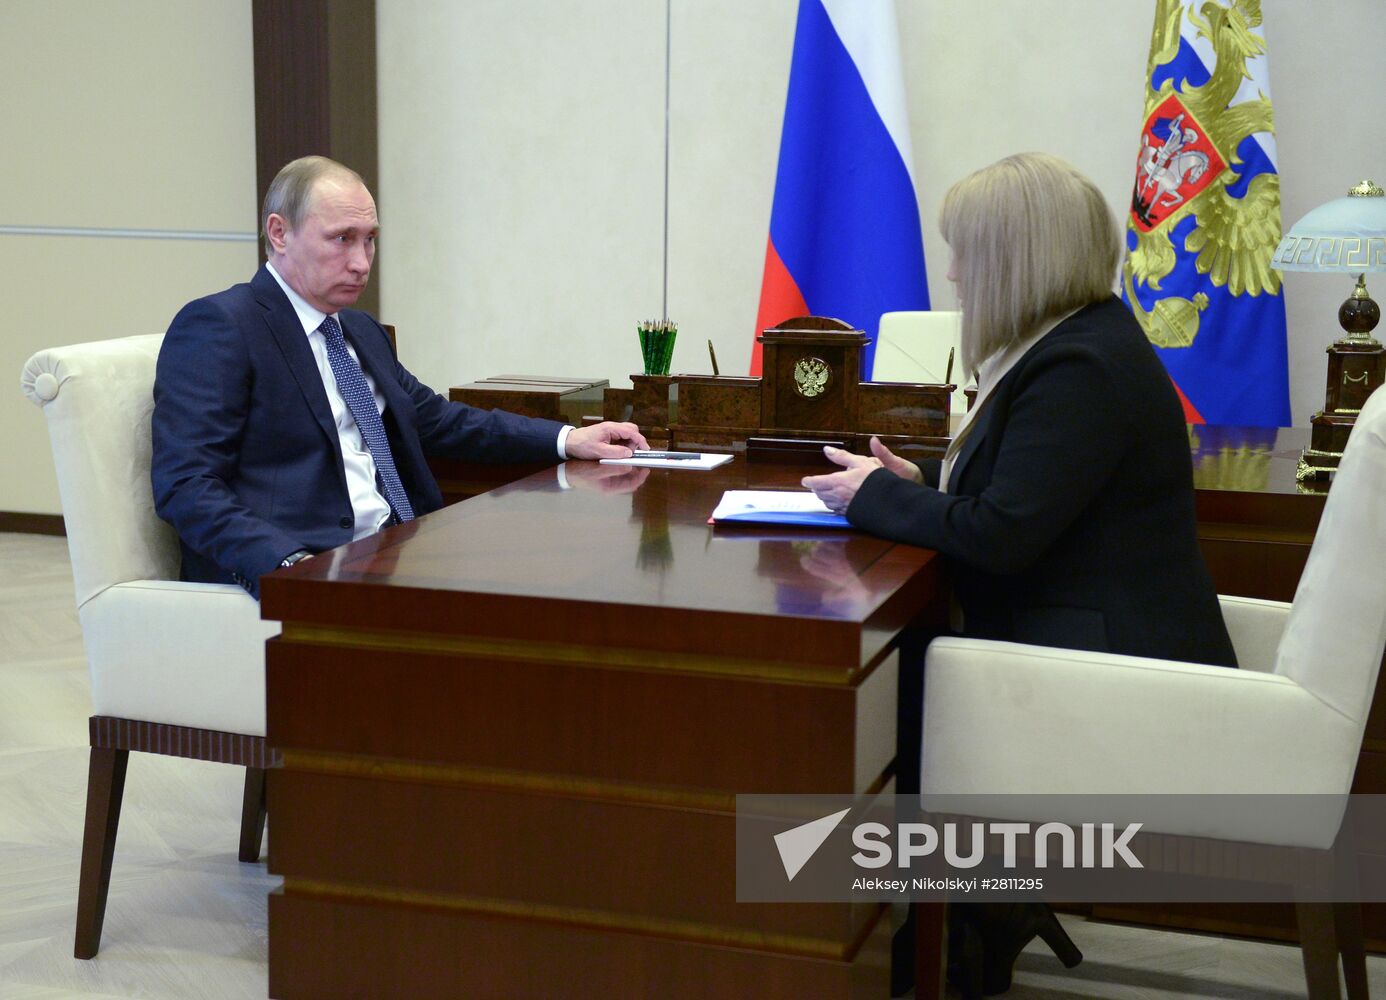 President Vladimir Putin meets with Human Rights Commissioner Ella Pamfilova